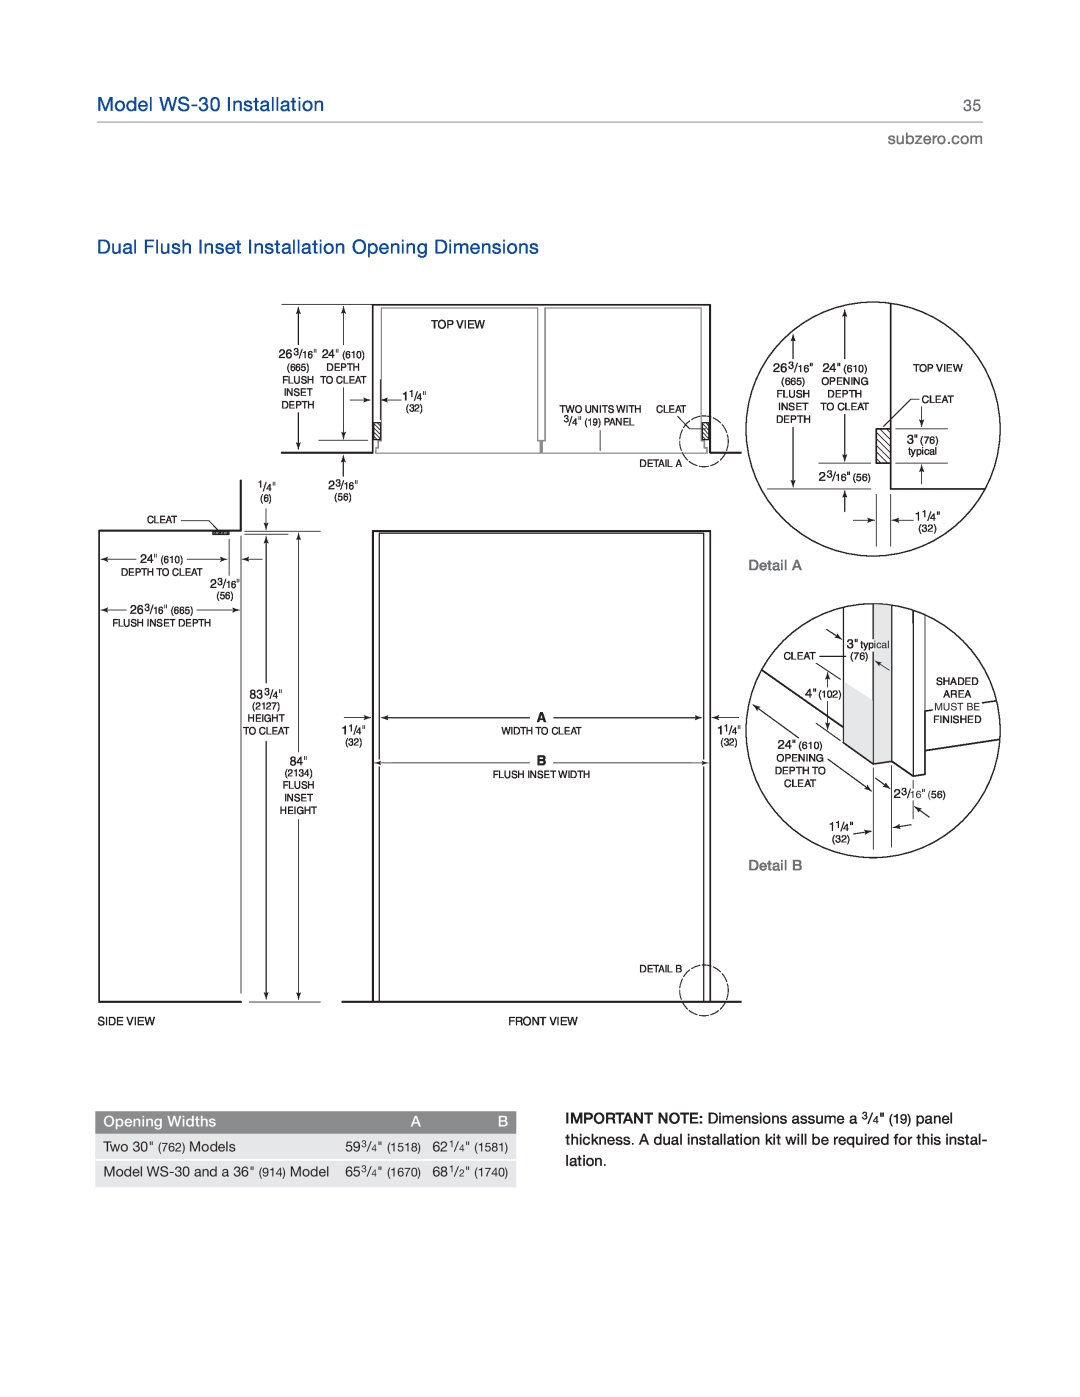 Sub-Zero 424G Dual Flush Inset Installation Opening Dimensions, Model WS-30 Installation, subzero.com, Detail A, Detail B 